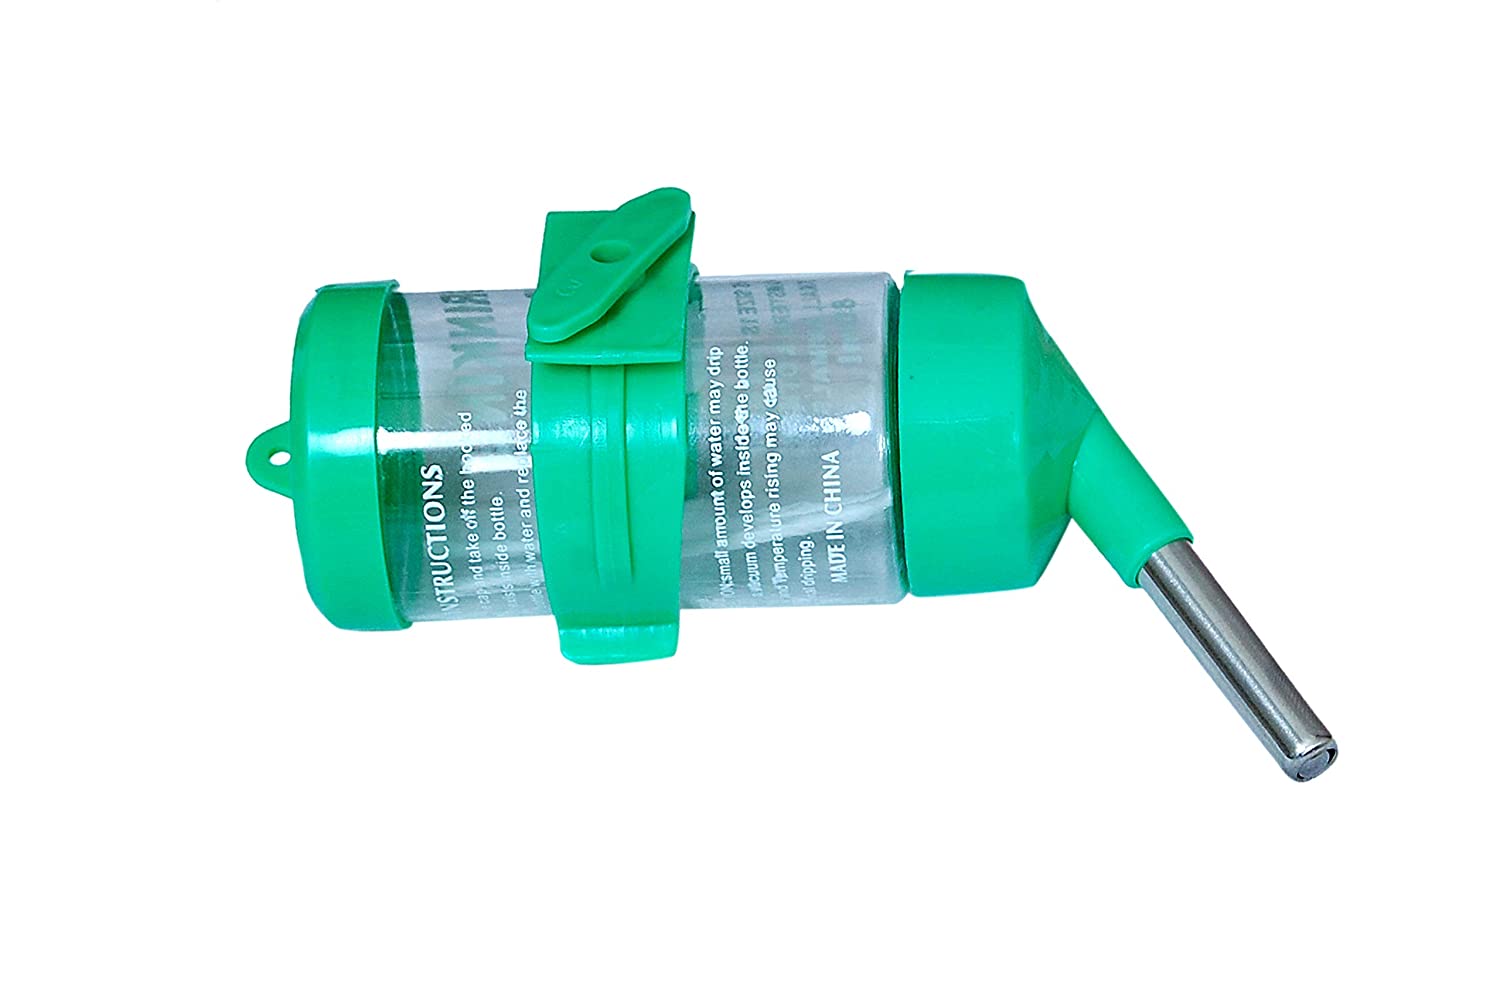 Leak Proof Water Bottle Sipper for Guinea Pigs, Rabbits, Hamsters, Mice Etc. (75 ml)